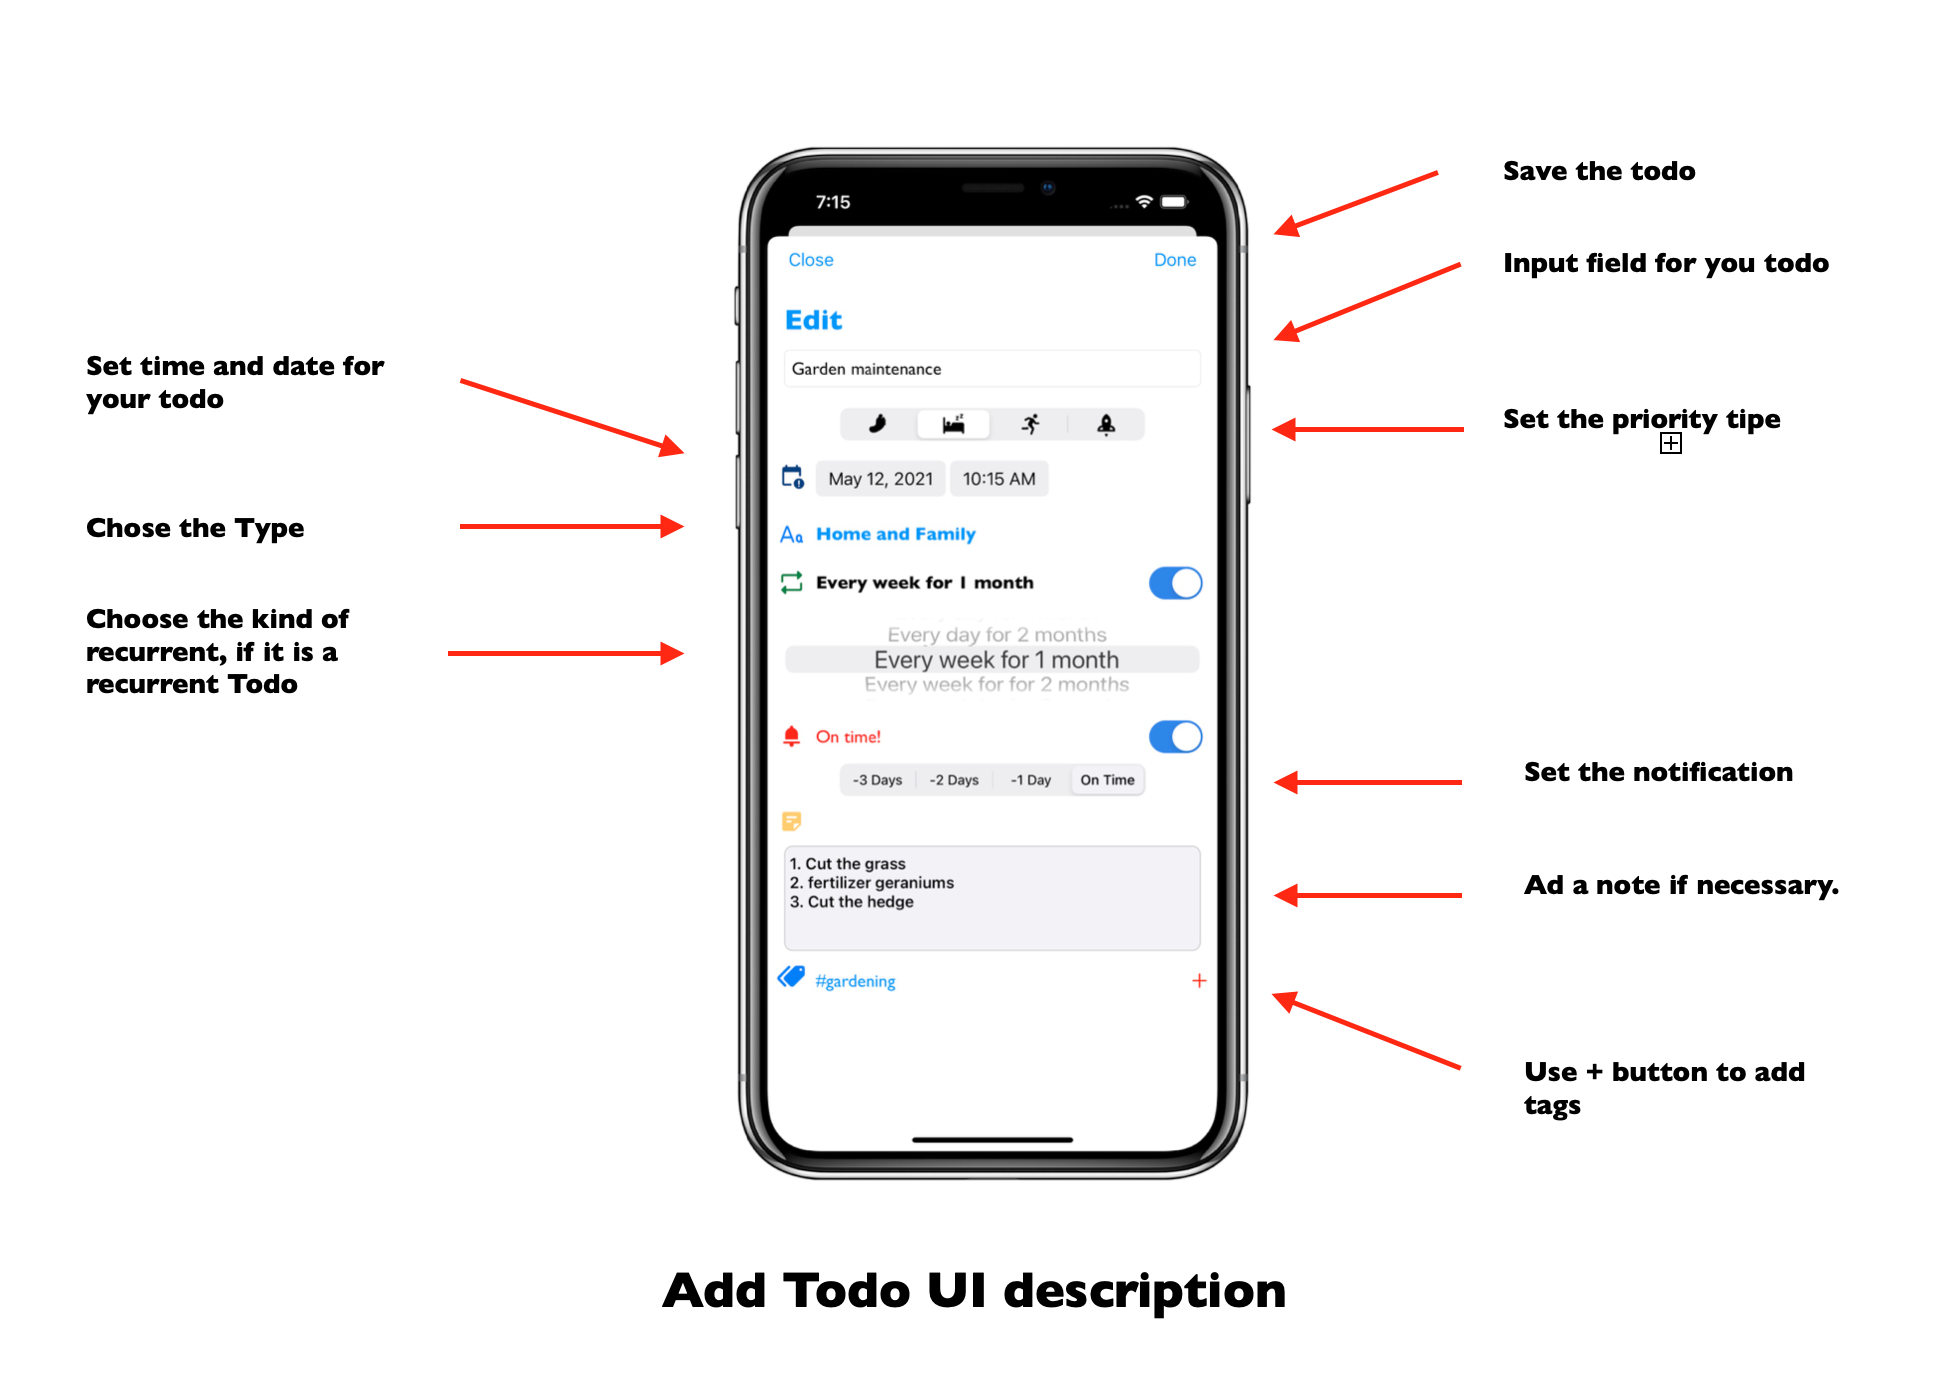 Add "ToDo" UI description